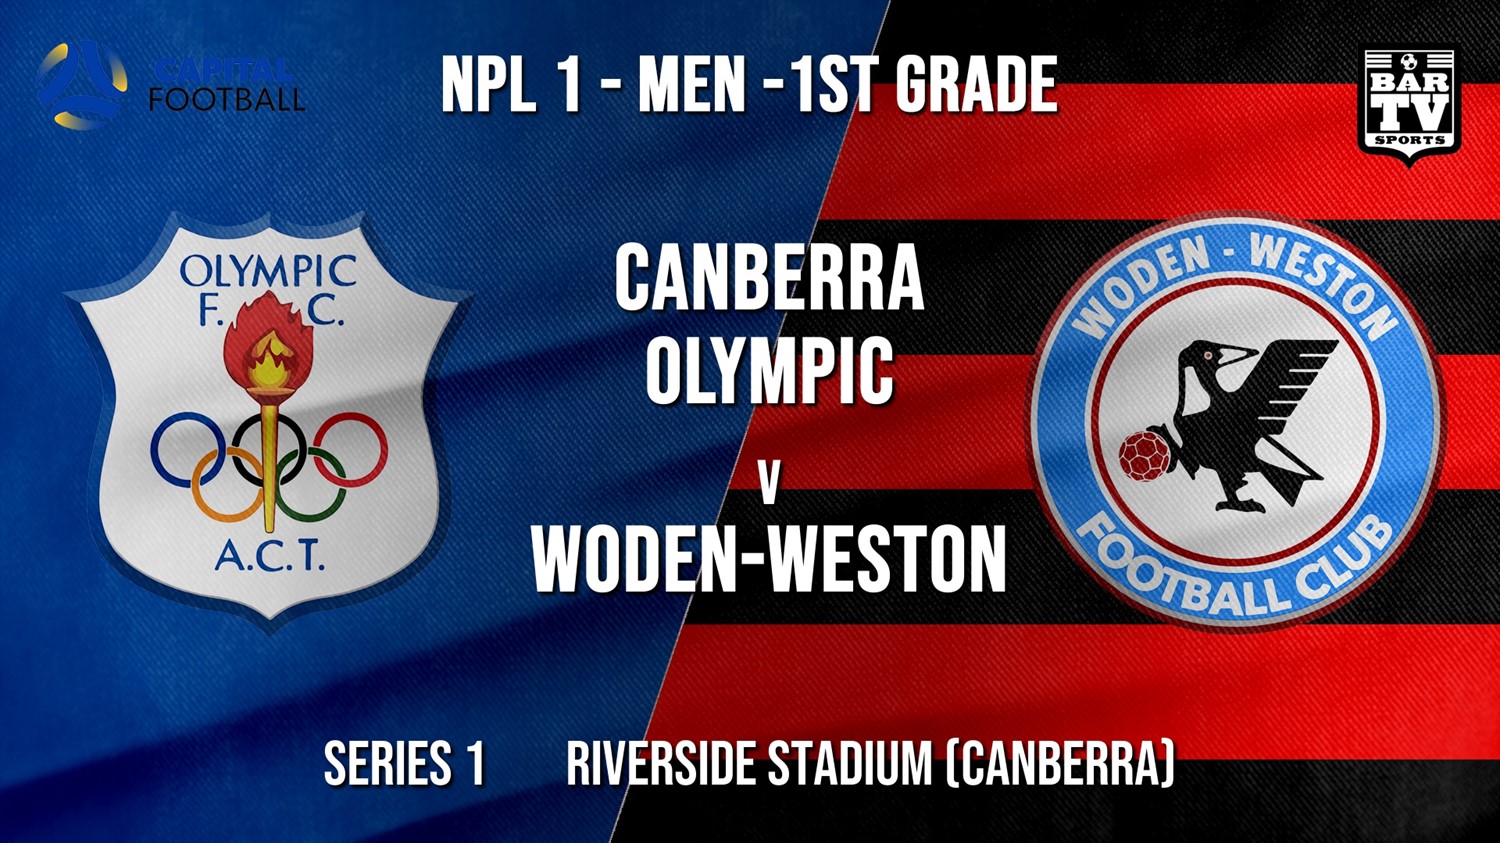 NPL - CAPITAL Series 1 - Canberra Olympic FC v Woden-Weston FC Minigame Slate Image